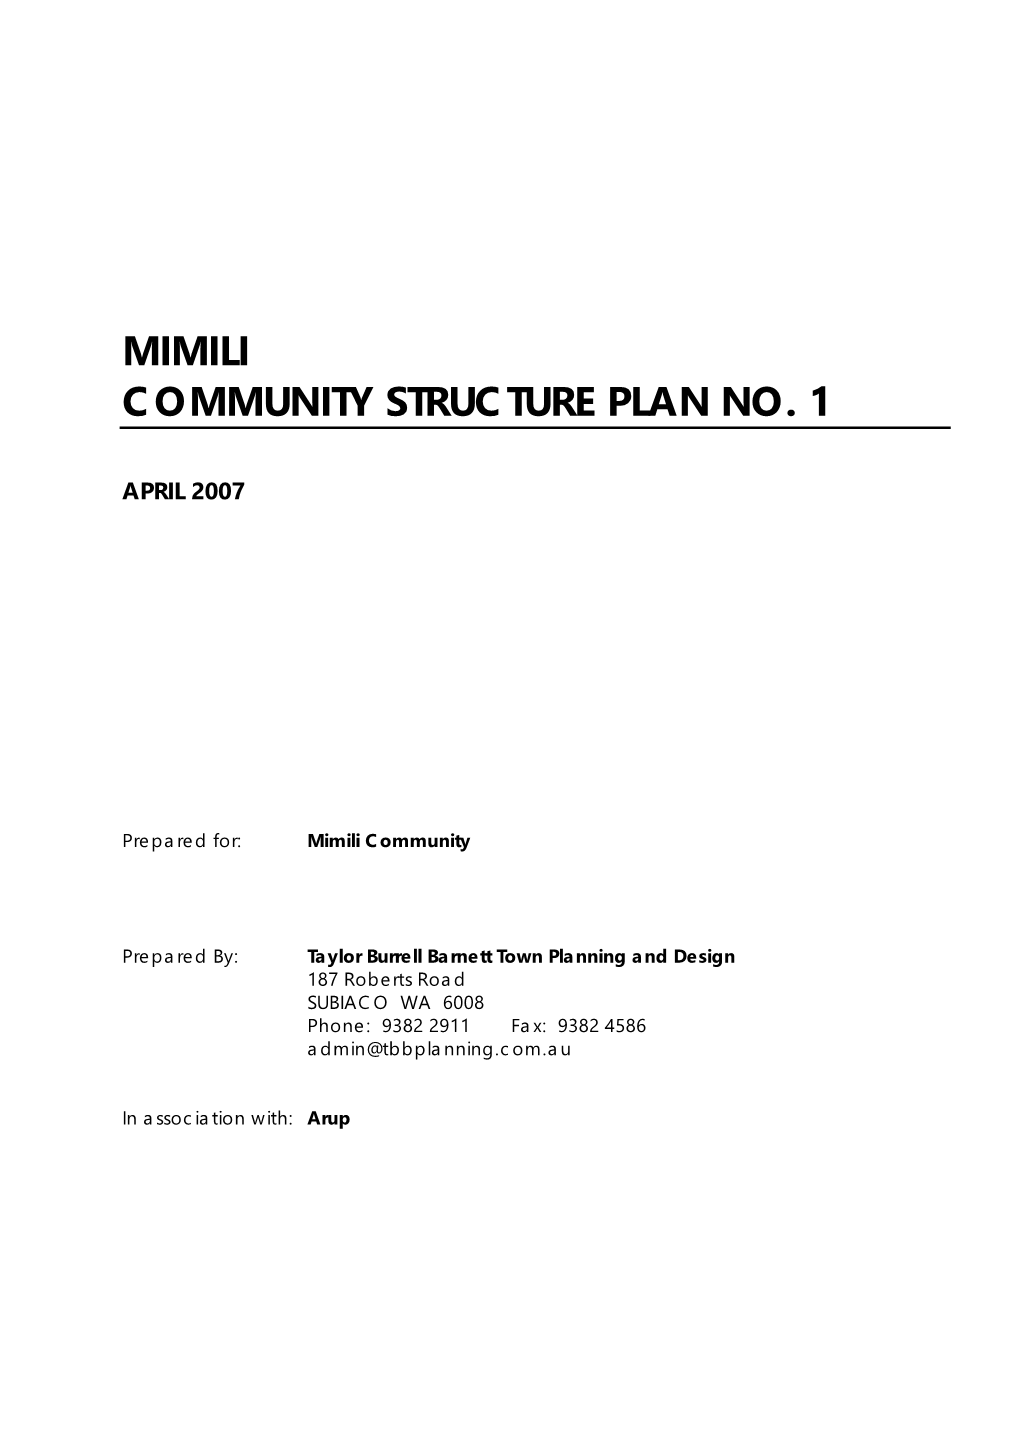 Mimili Community Structure Plan No. 1